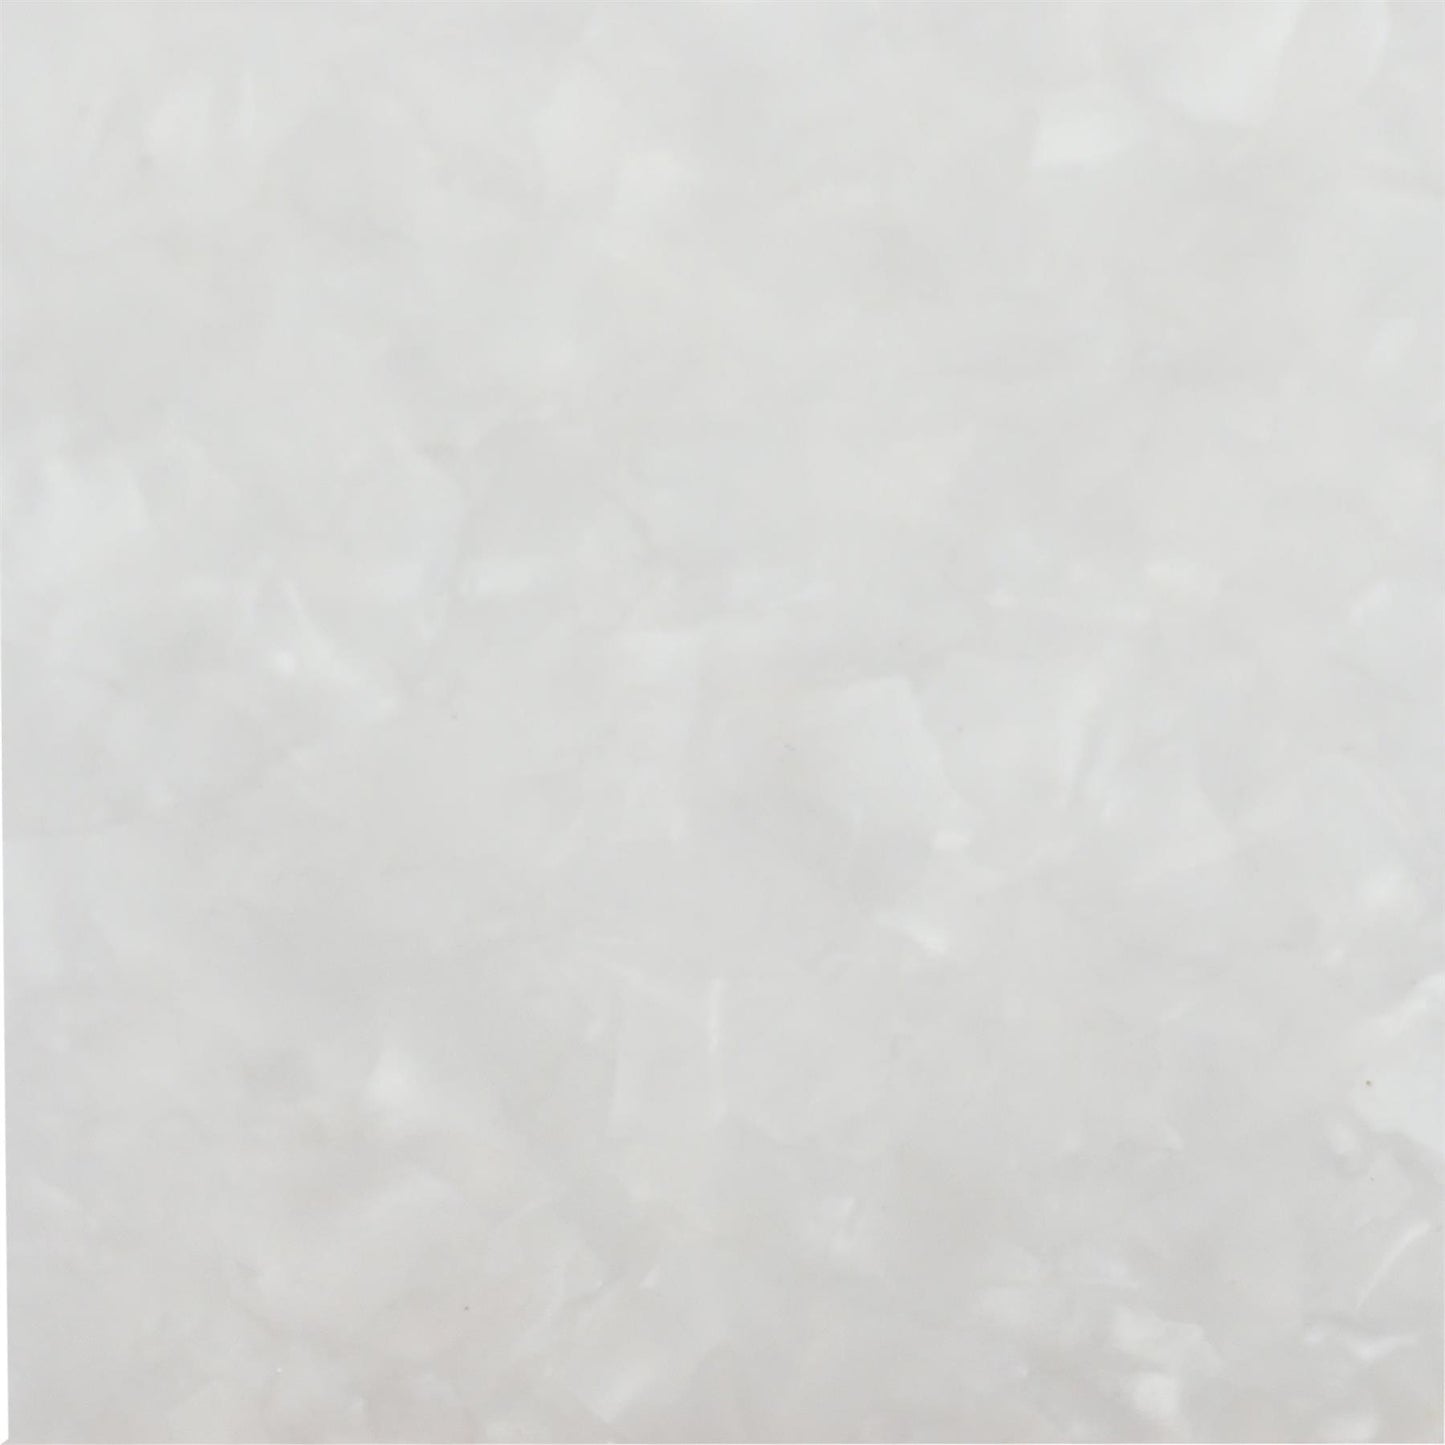 Incudo White Pearloid Acrylic Sheet - 250x150x3mm